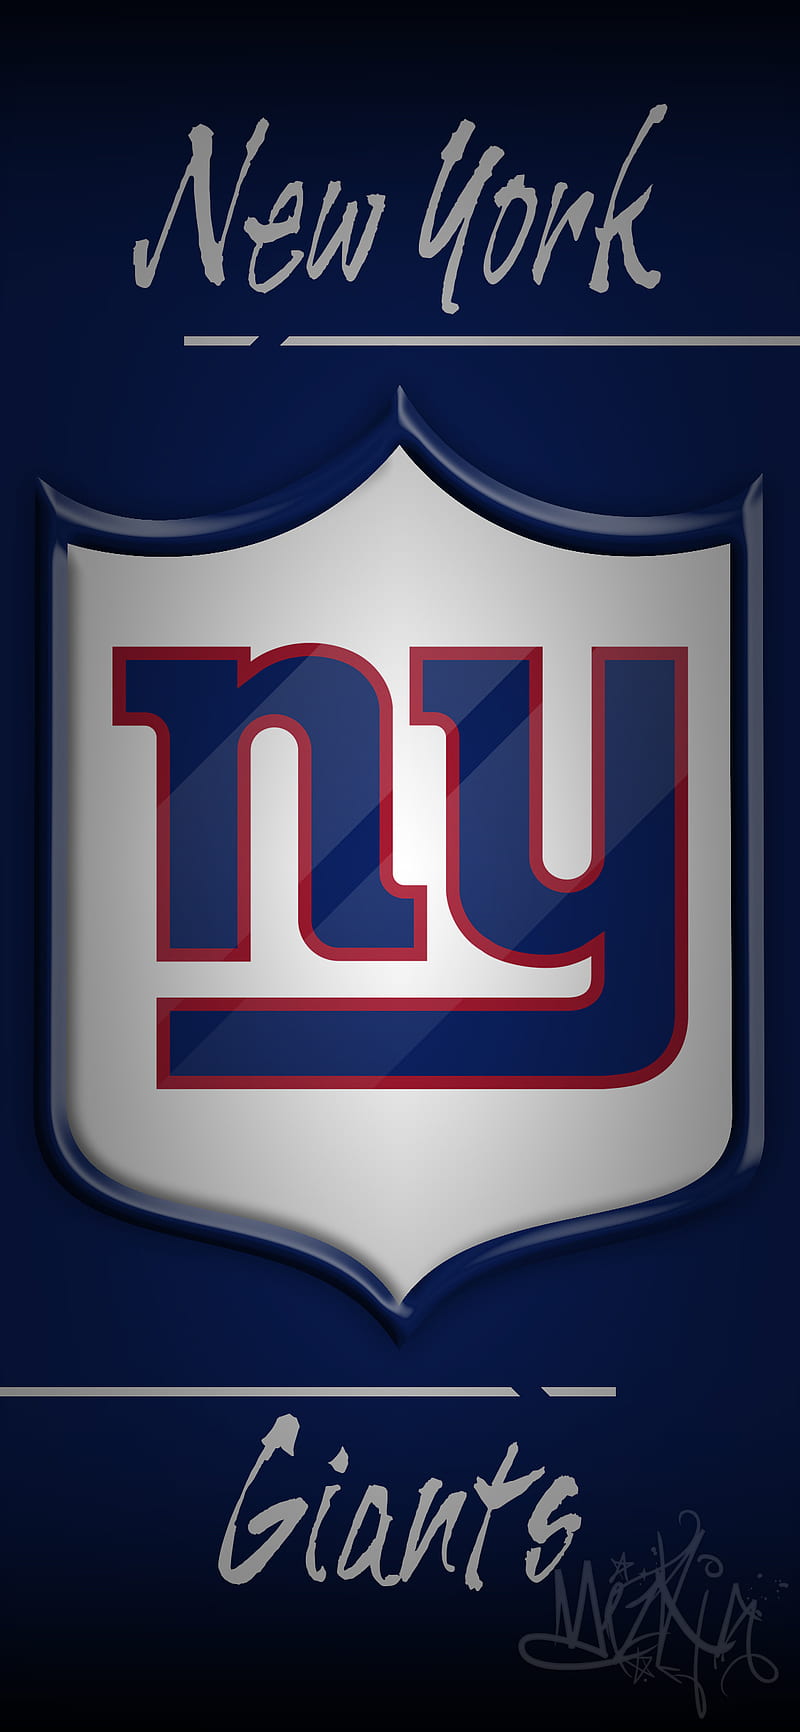 New York Giants iPhone wallpaper  New york giants logo Ny giants New  york giants